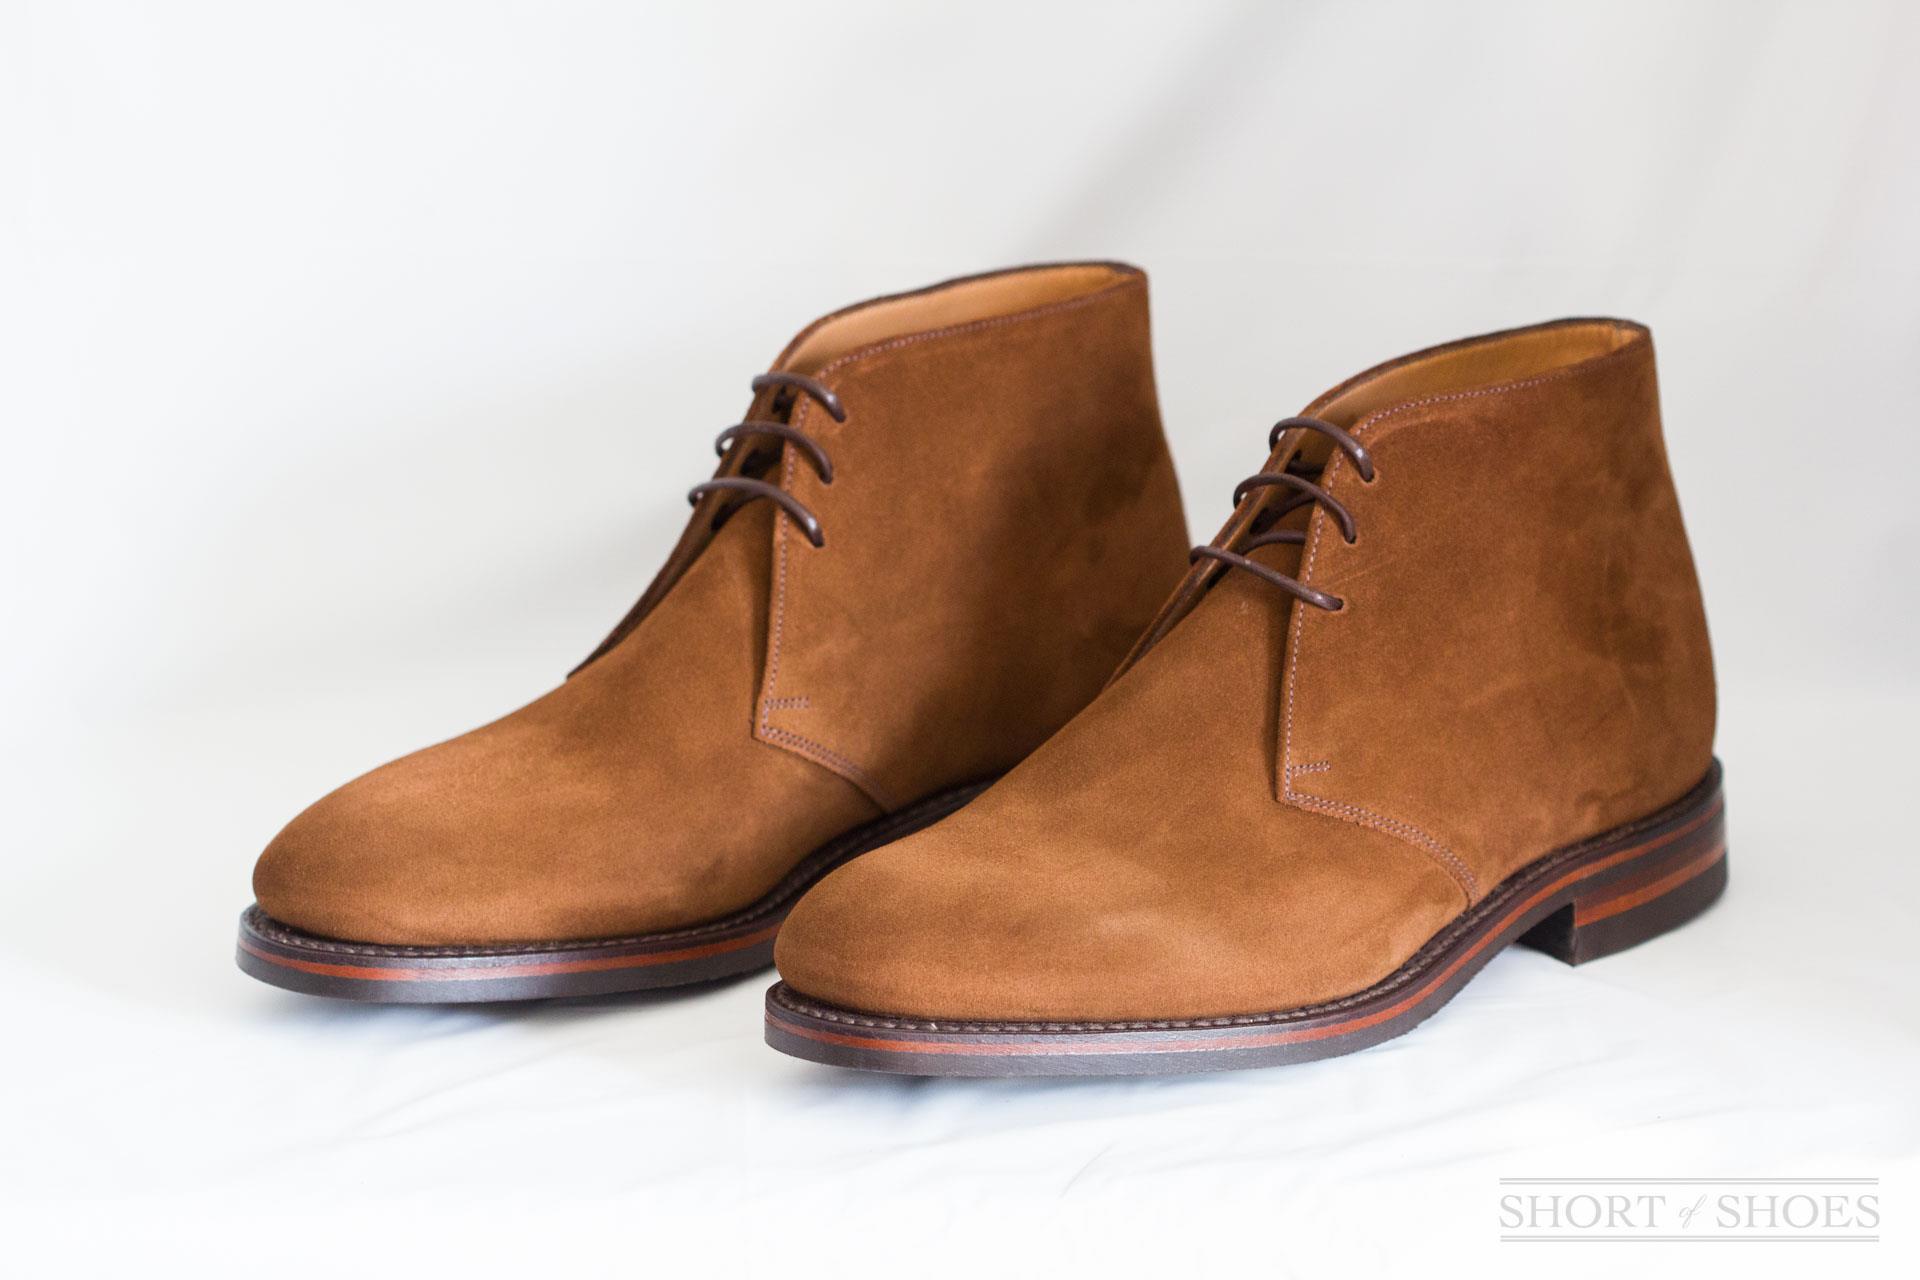 Loake Shoes Review - Kempton Suede Chukka 1880 Line